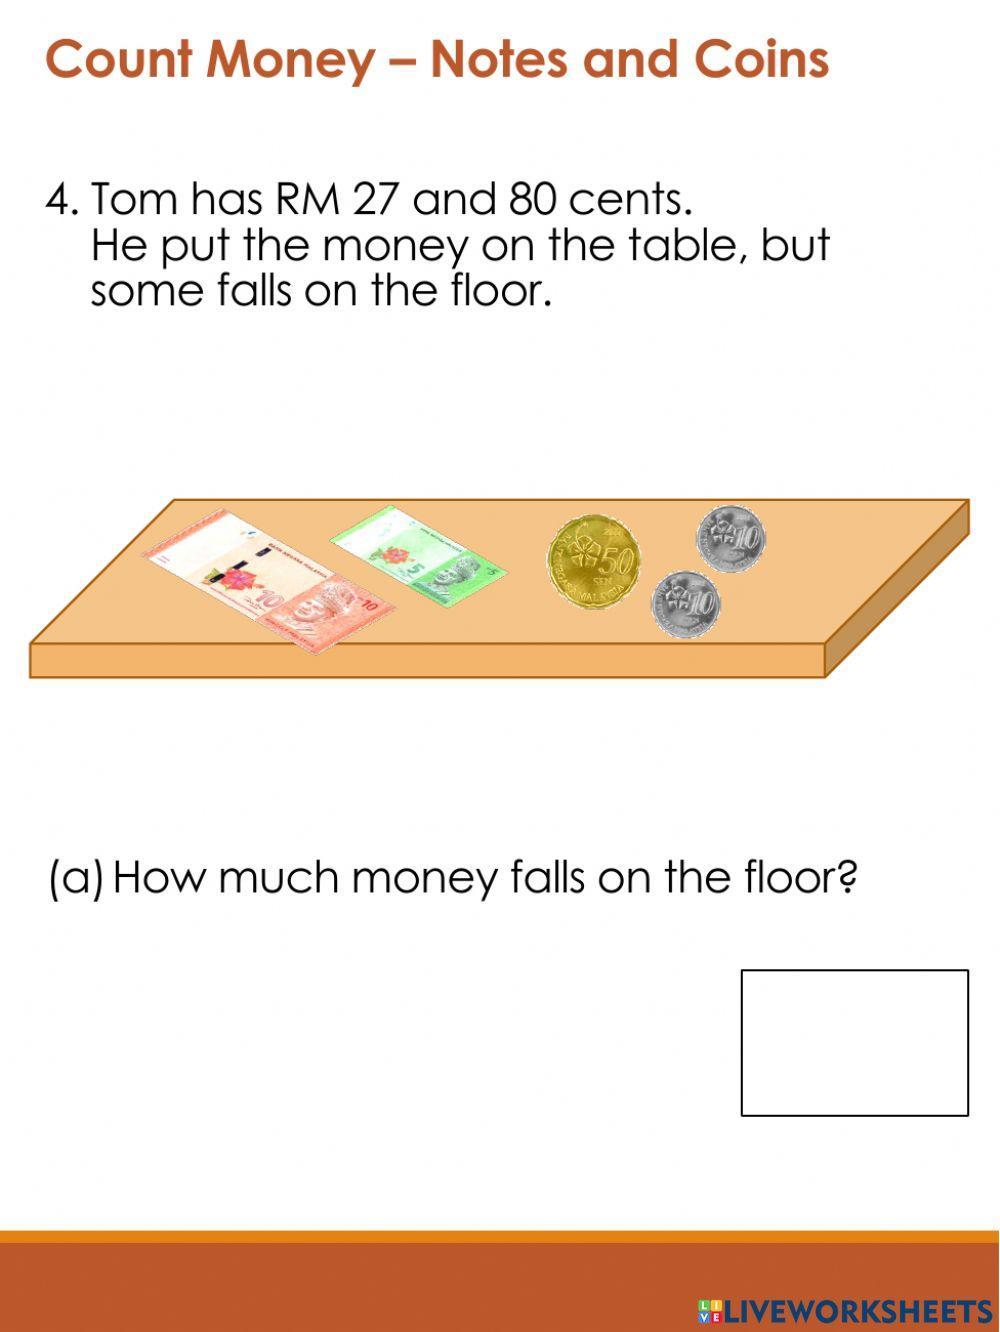 Counting Money (Malaysian)